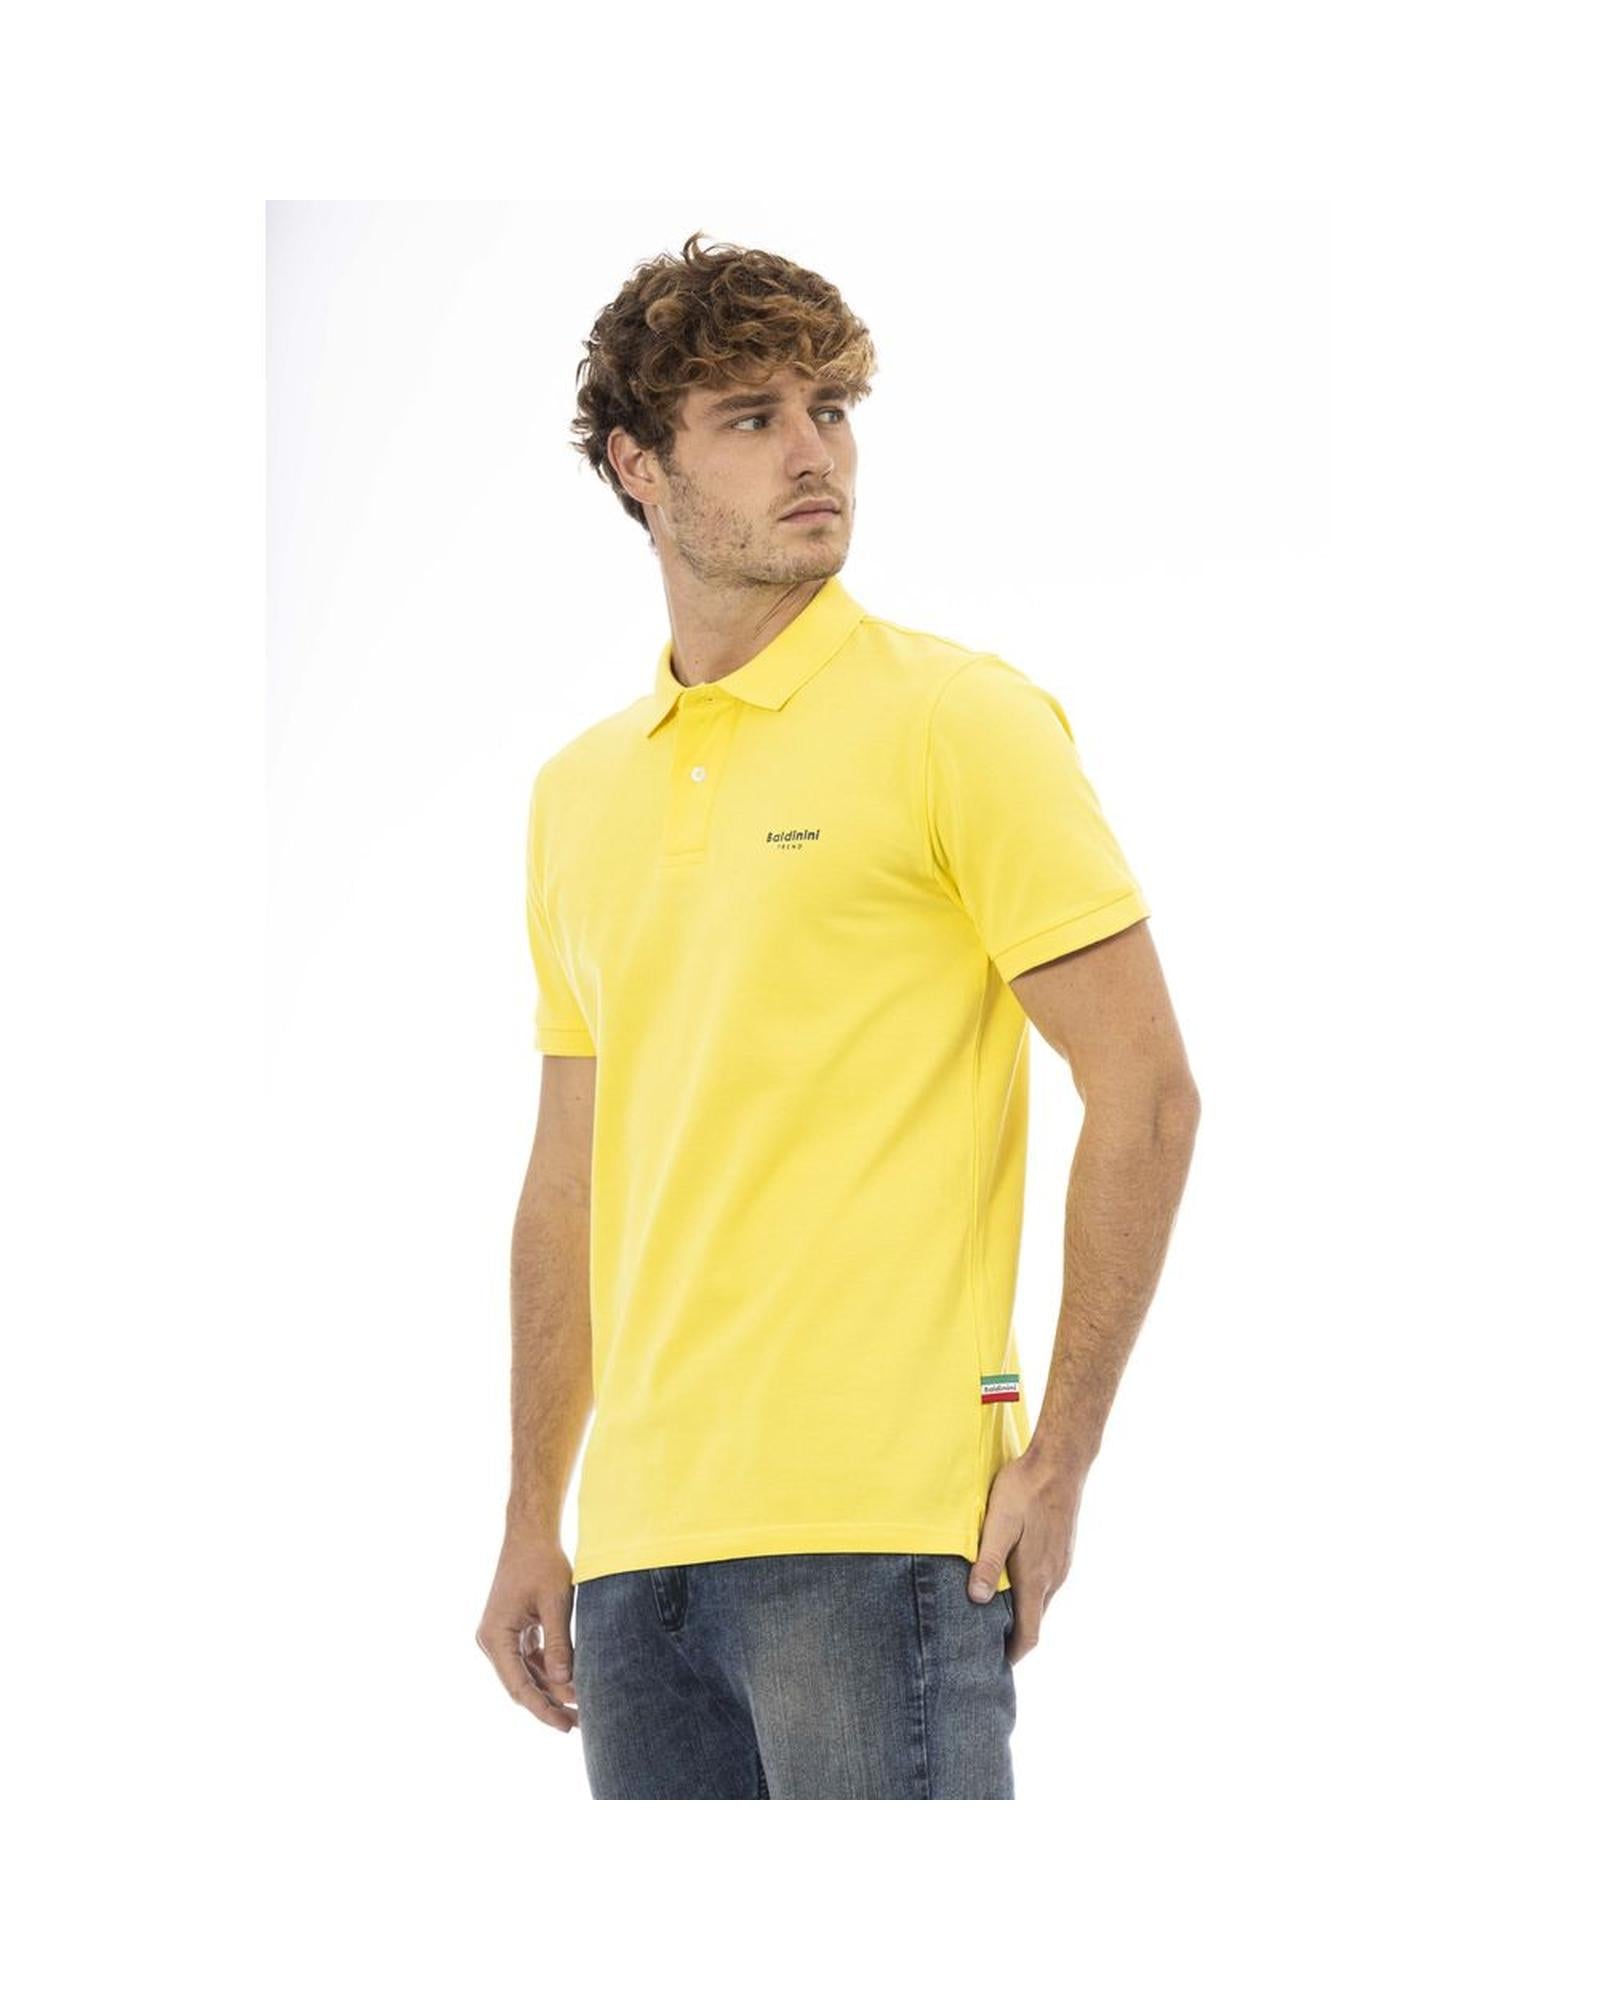 Men's Yellow Cotton Polo Shirt - M